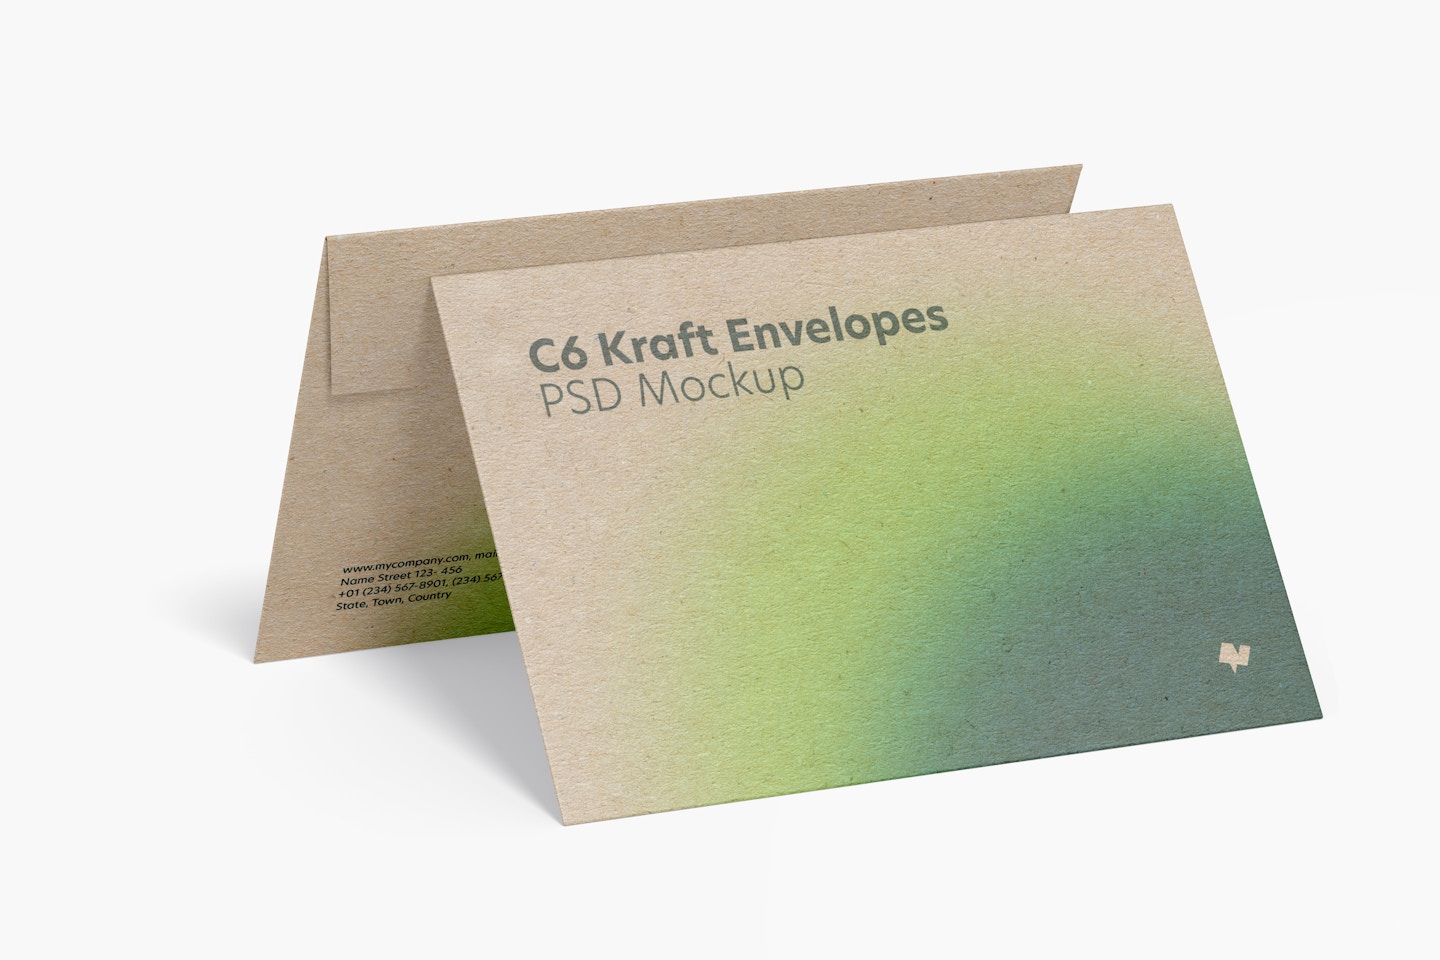 C6 Kraft Envelopes Mockup, Right View